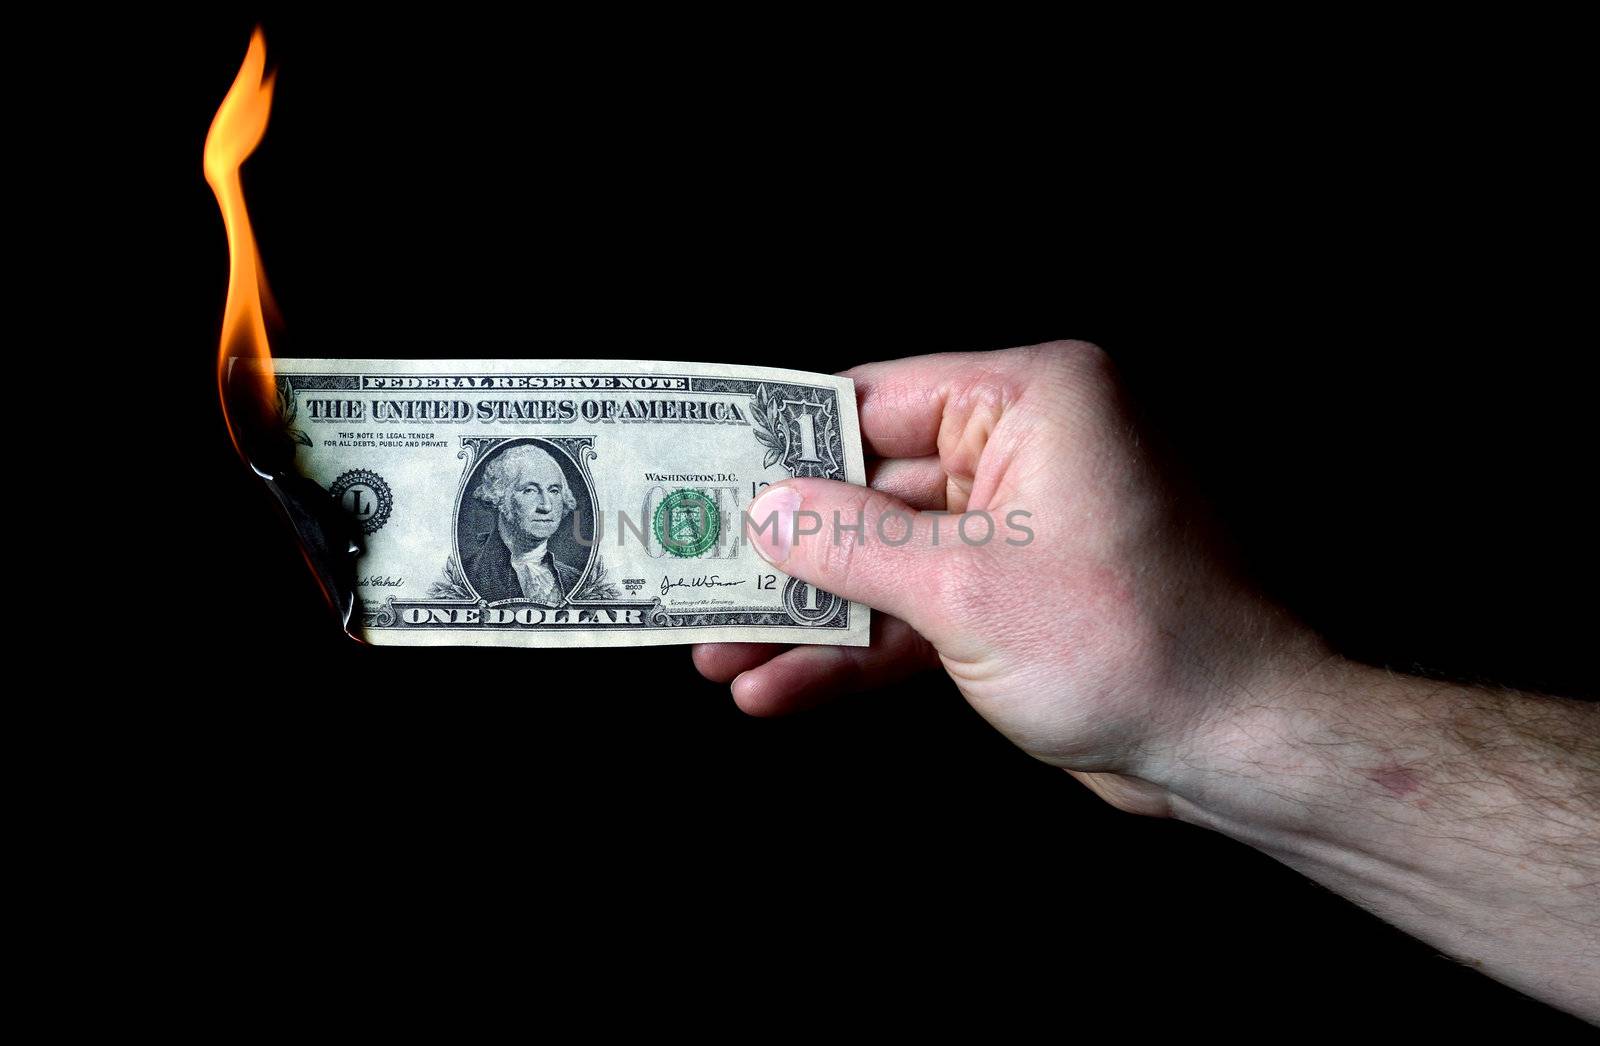 hand holding burning dollar isolated on black, concept of money to burn